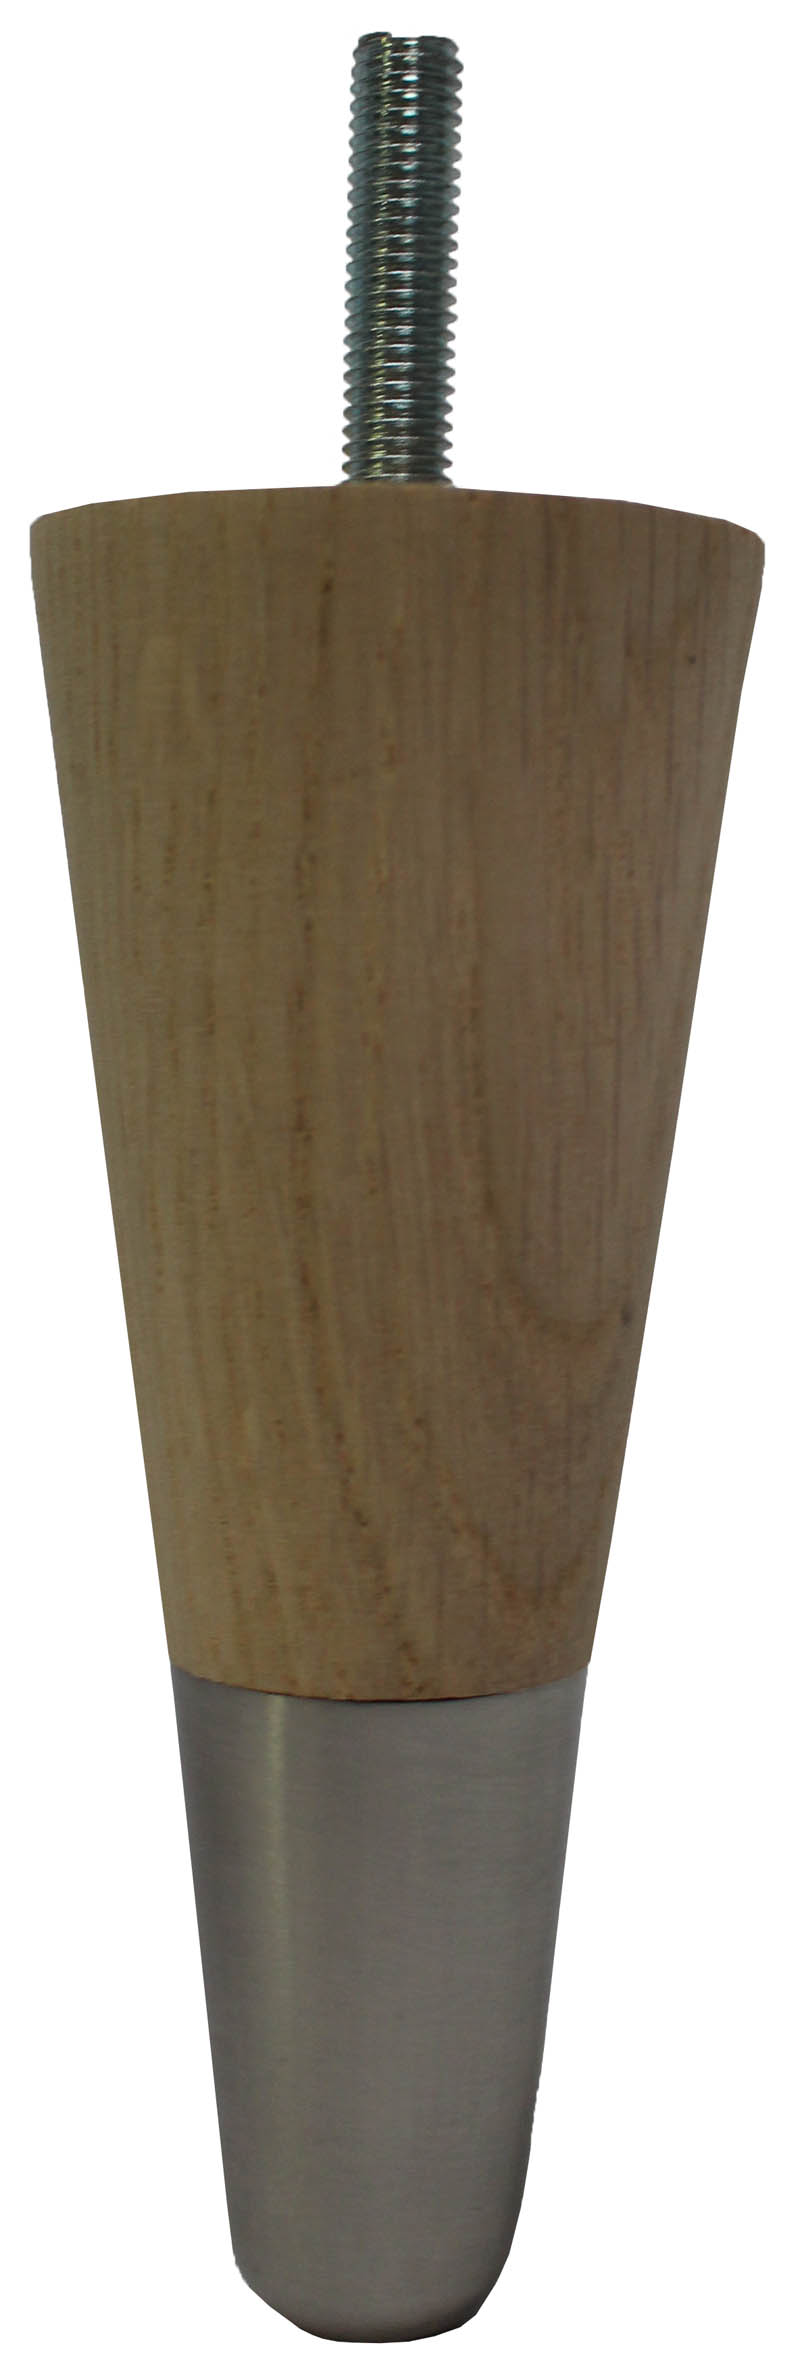 Amaryllis Solid Oak Tapered Furniture Legs - Raw Finish - Satin Slipper Cups - Set of 4